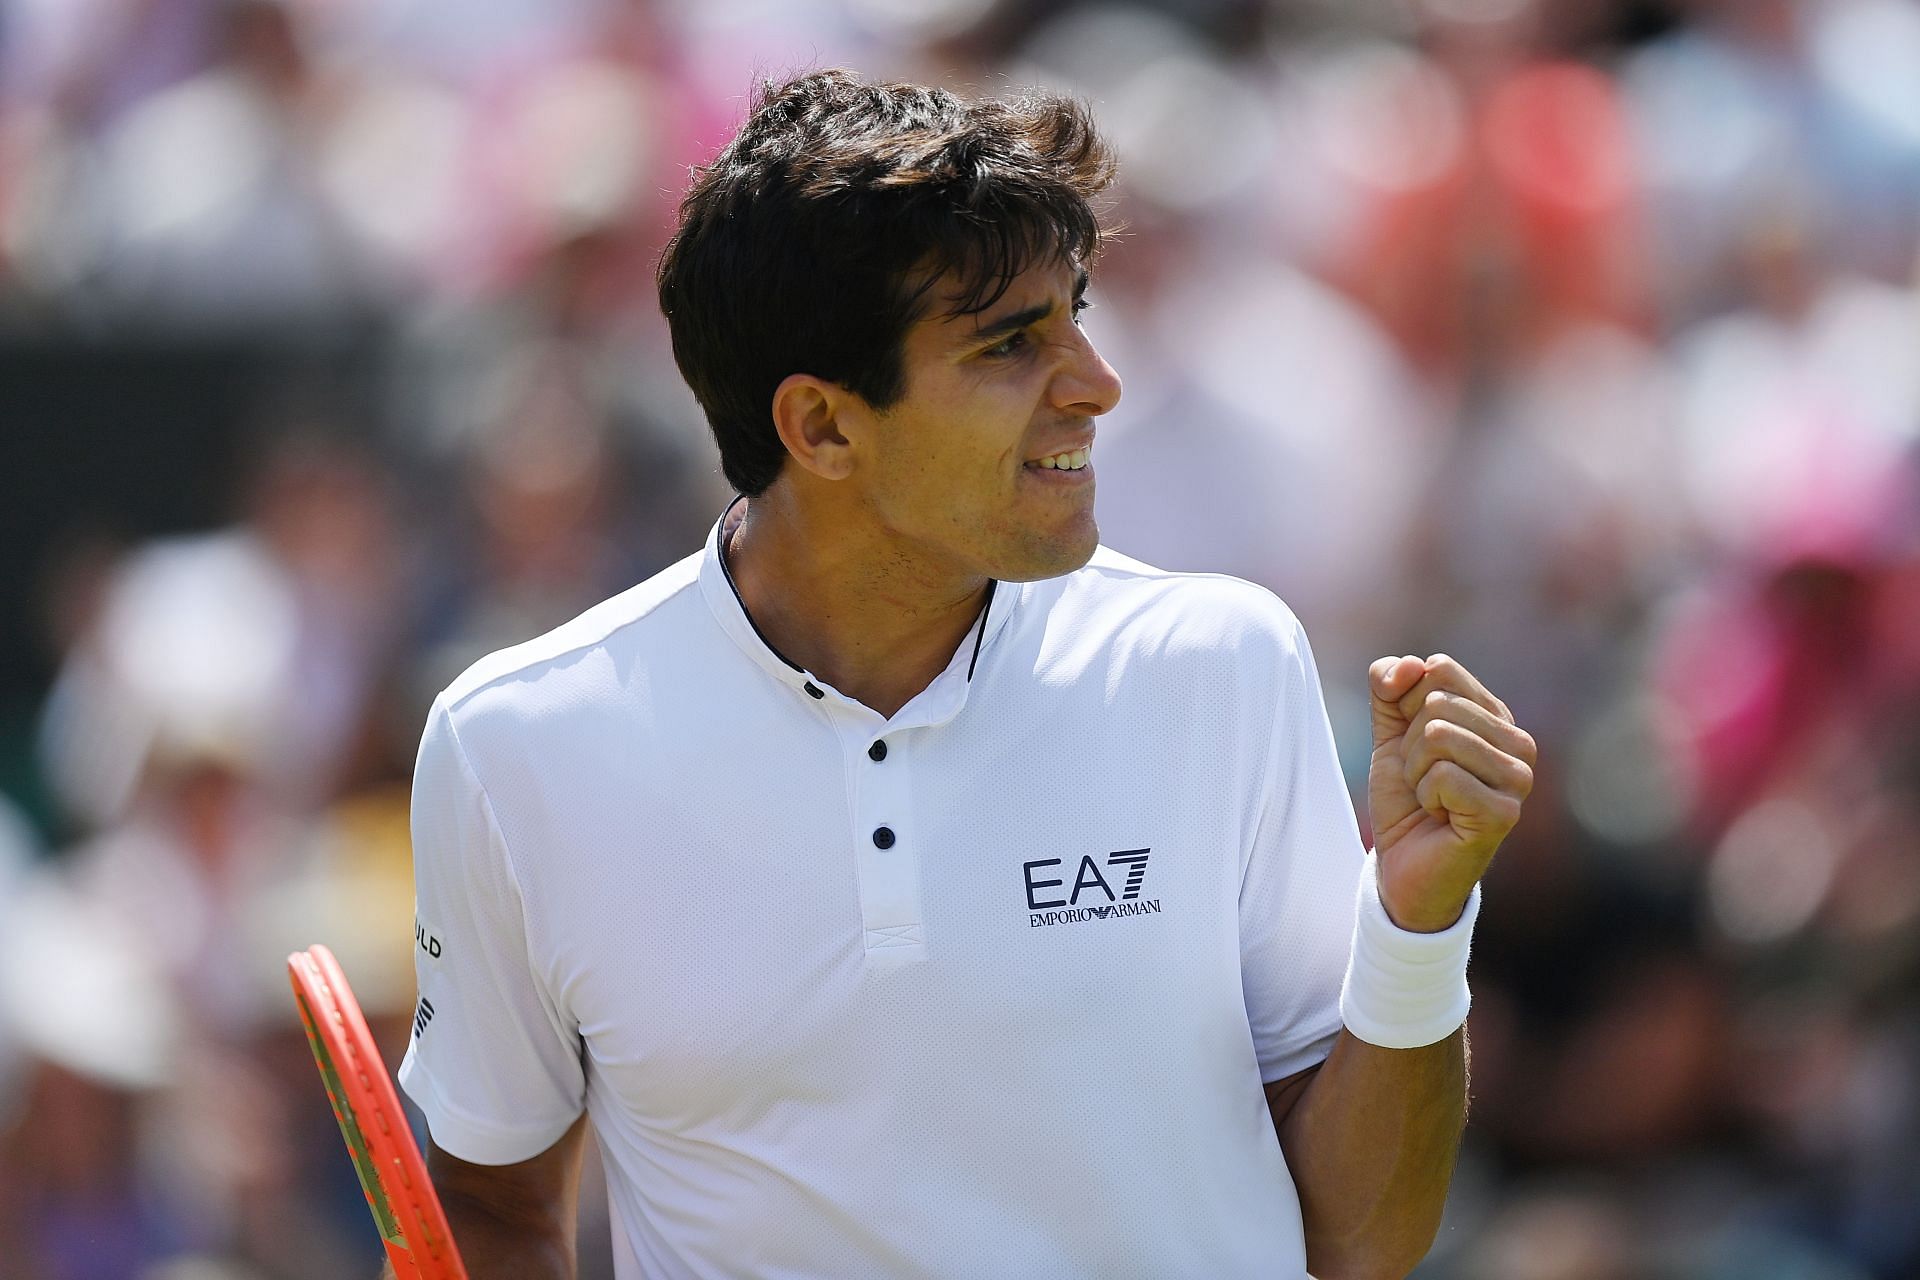 Cristian Garin reached his maiden Grand Slam quarterfinal at the 2022 Wimbledon Championships.